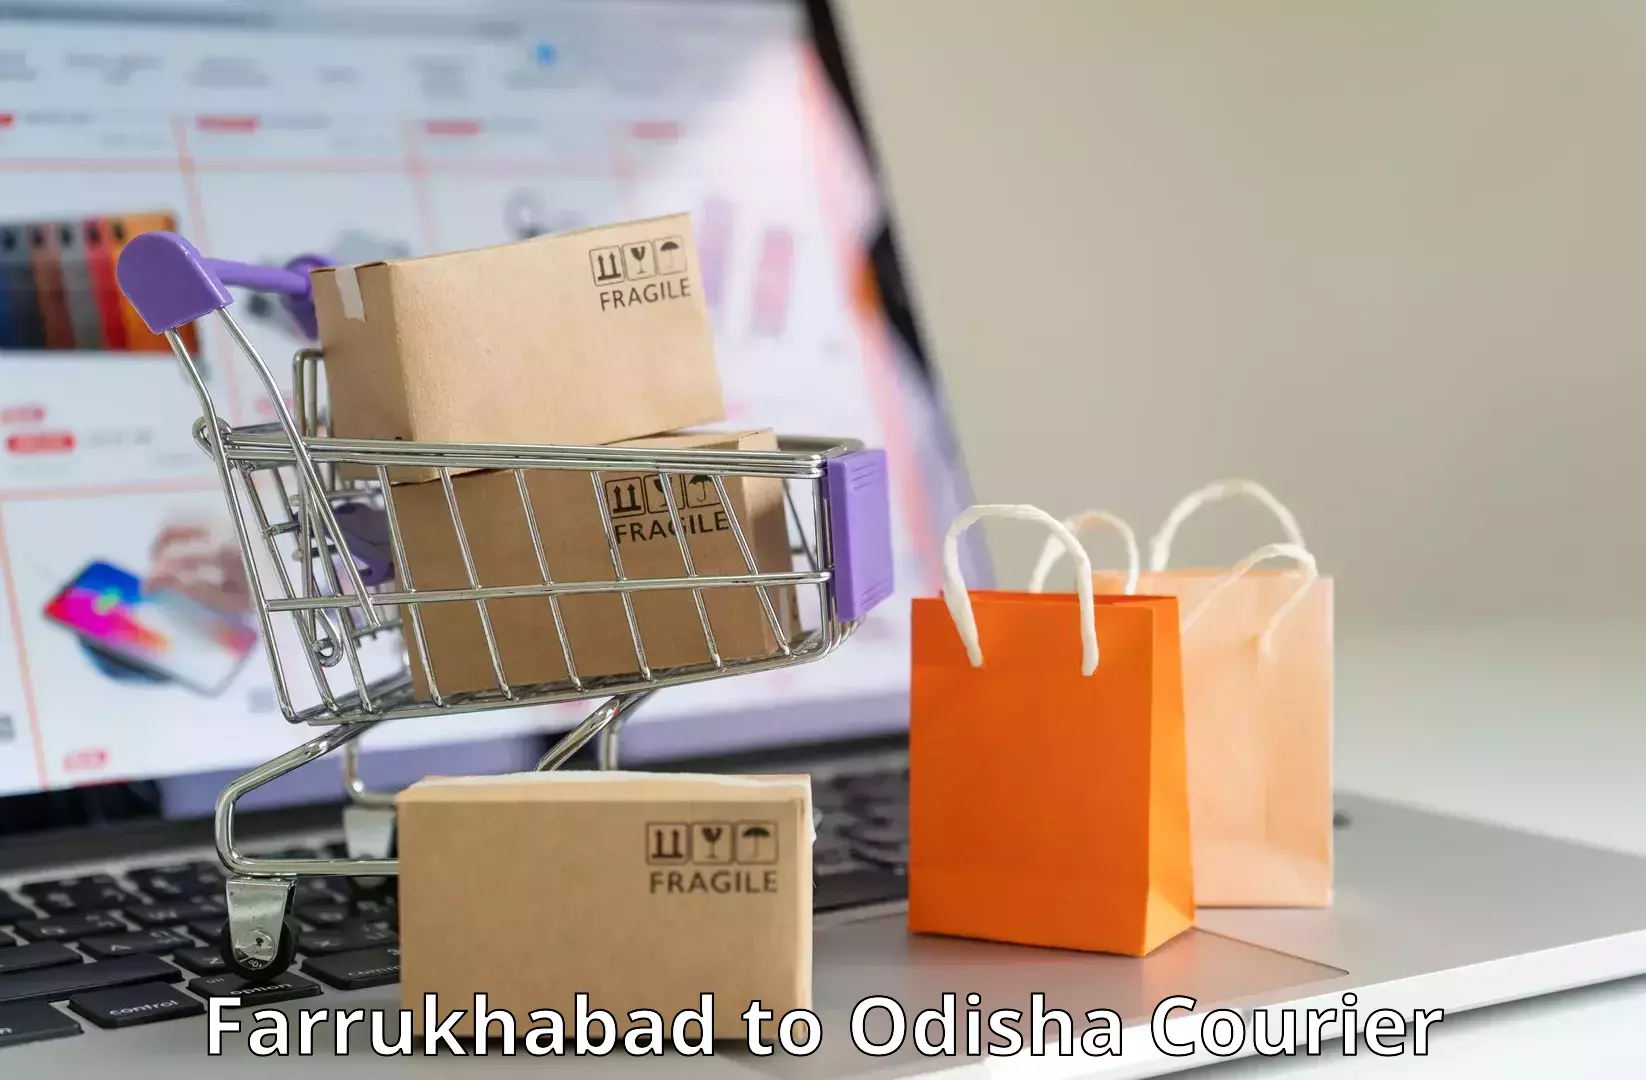 Courier service comparison Farrukhabad to Khariar